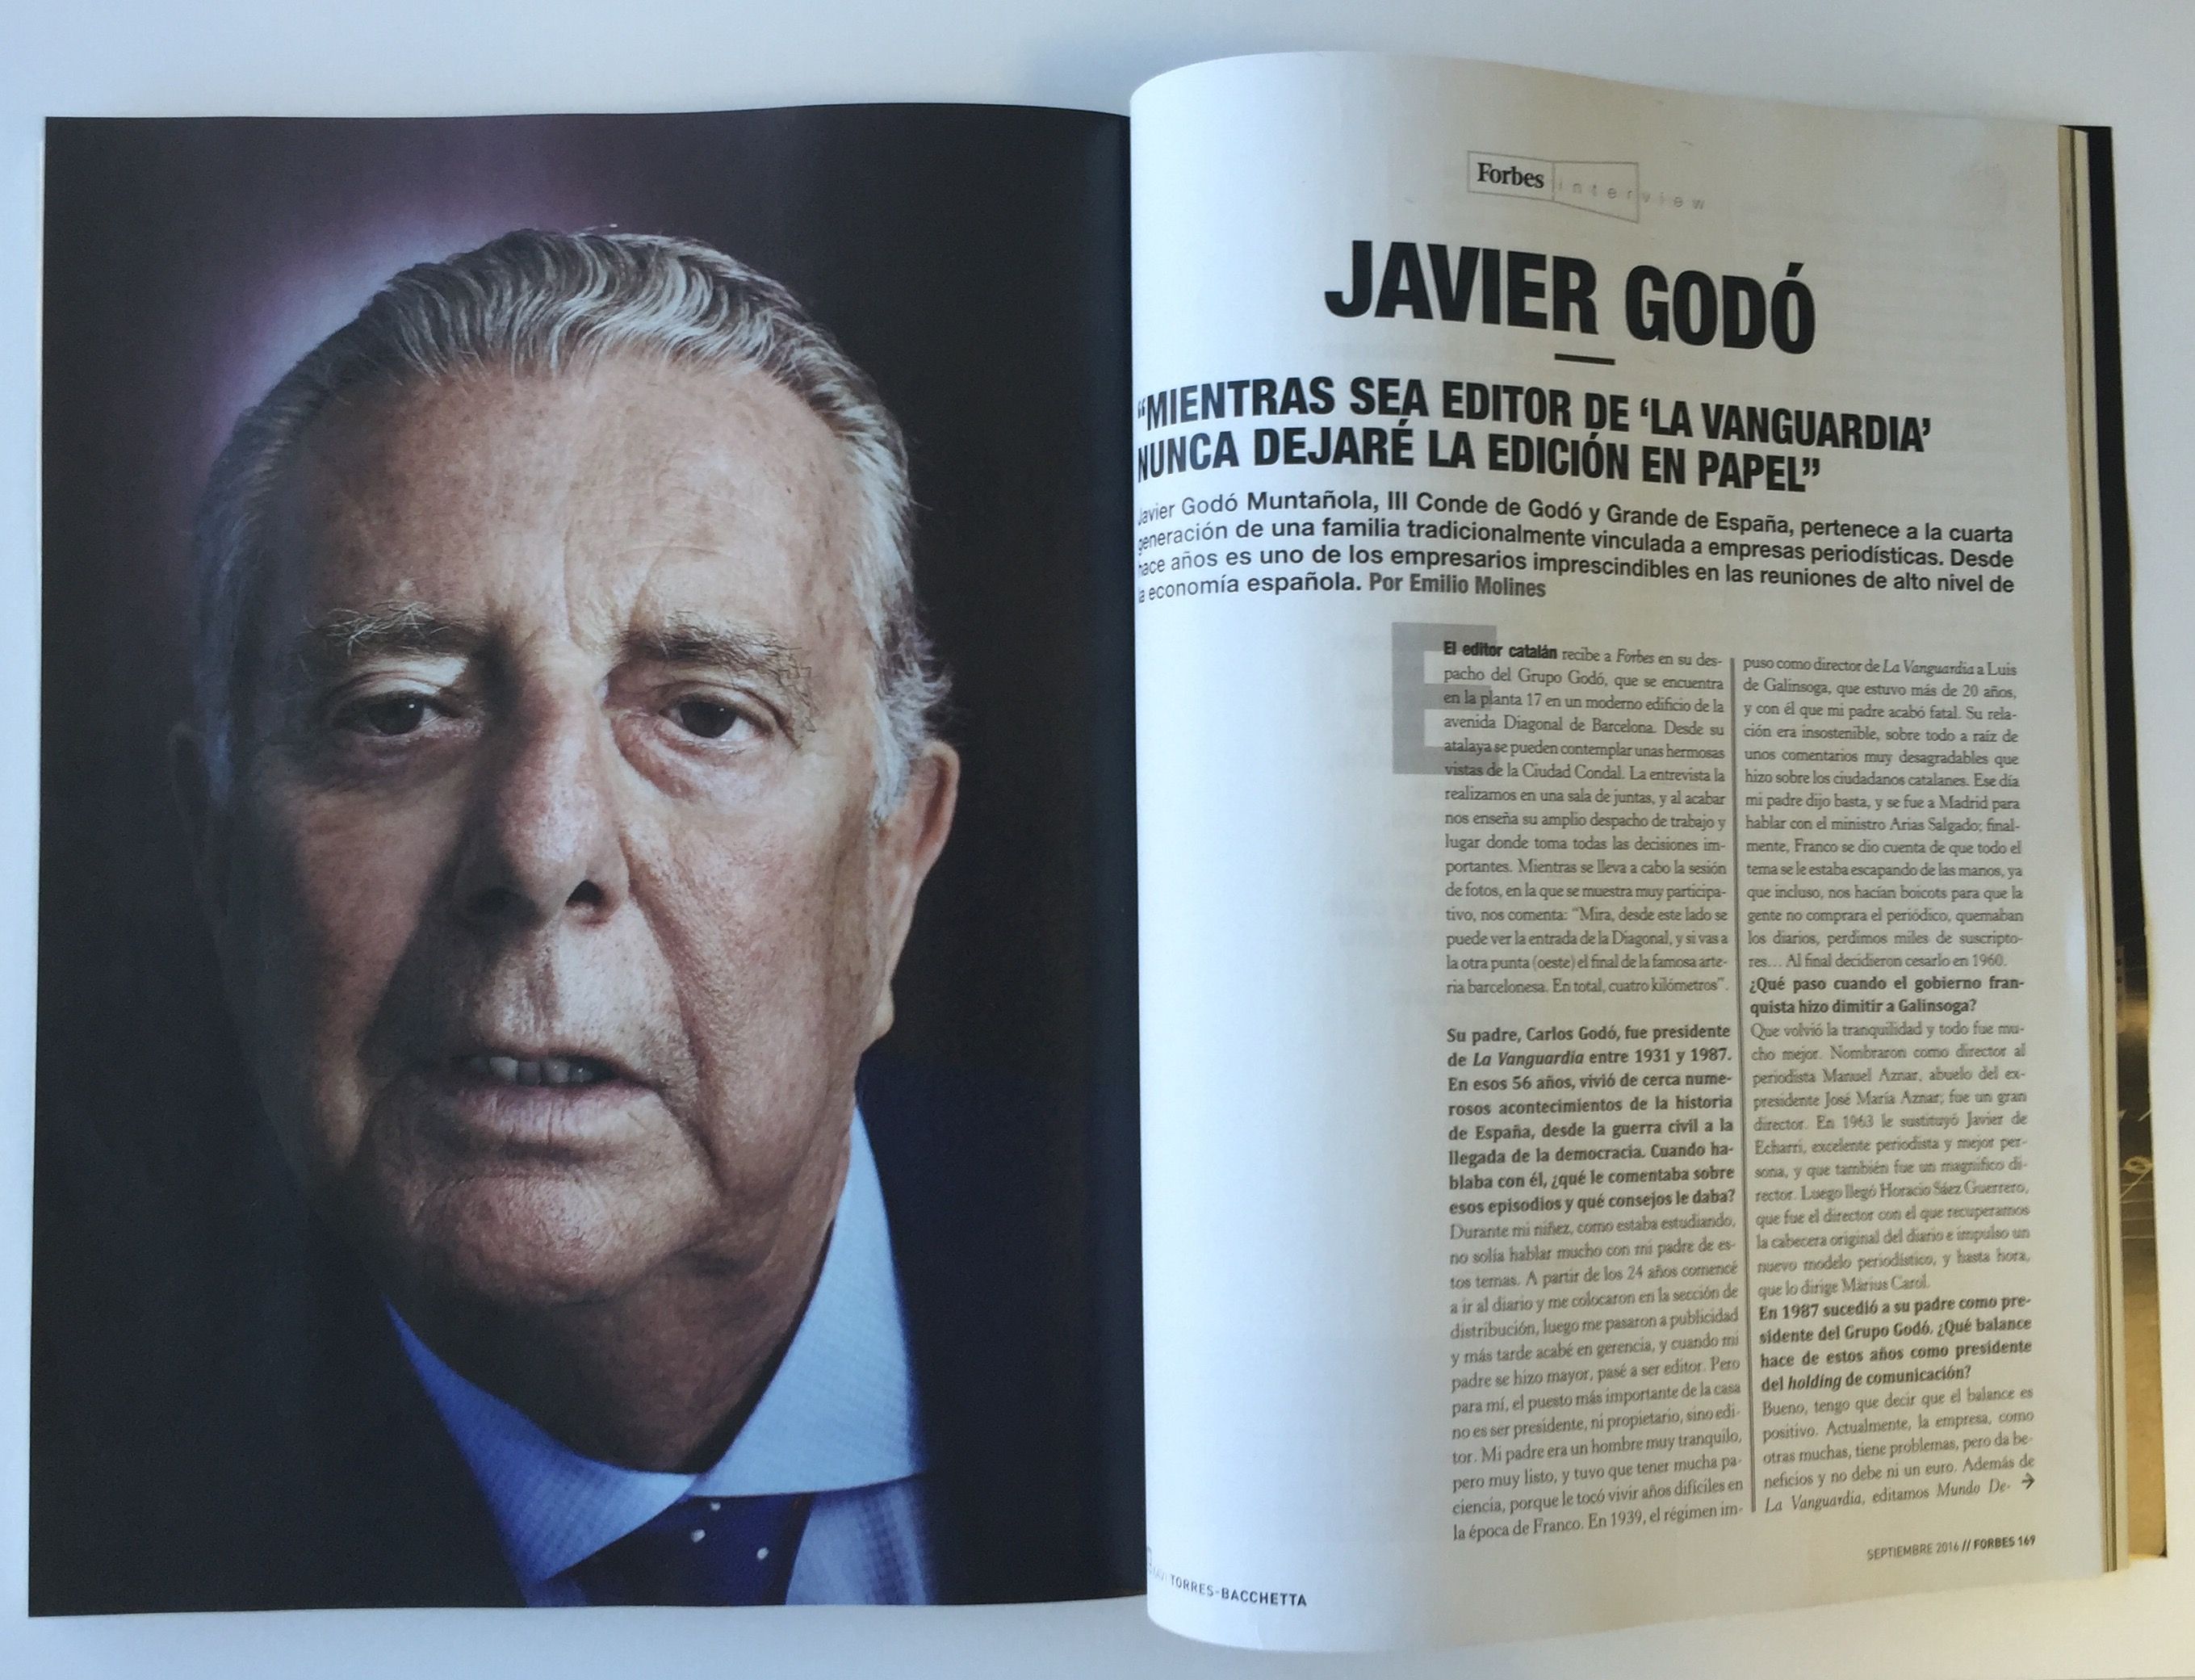 Javier Godó: "Tengo muchos desafíos antes de jubilarme"